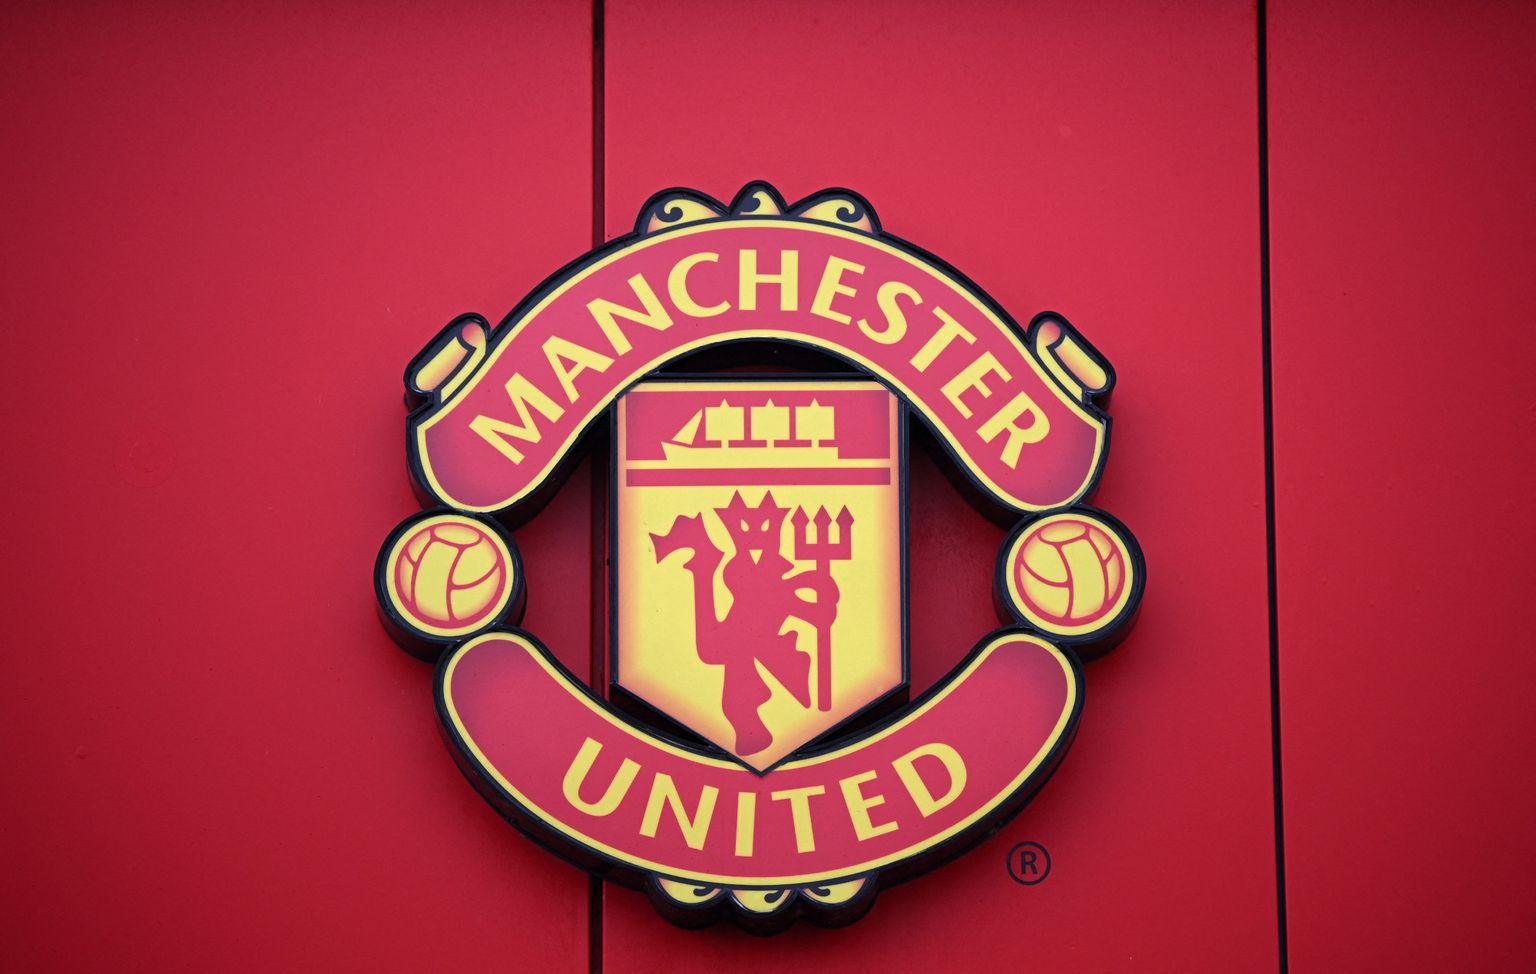 Mančestras "United" logo